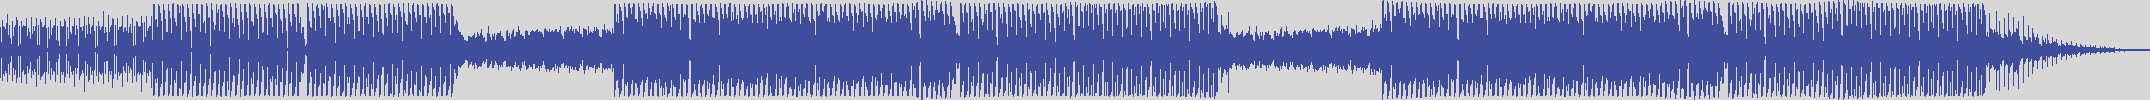 nf_boyz_records [NFY074] Tech Boy - Play That Rhythms [T Element Mix] audio wave form